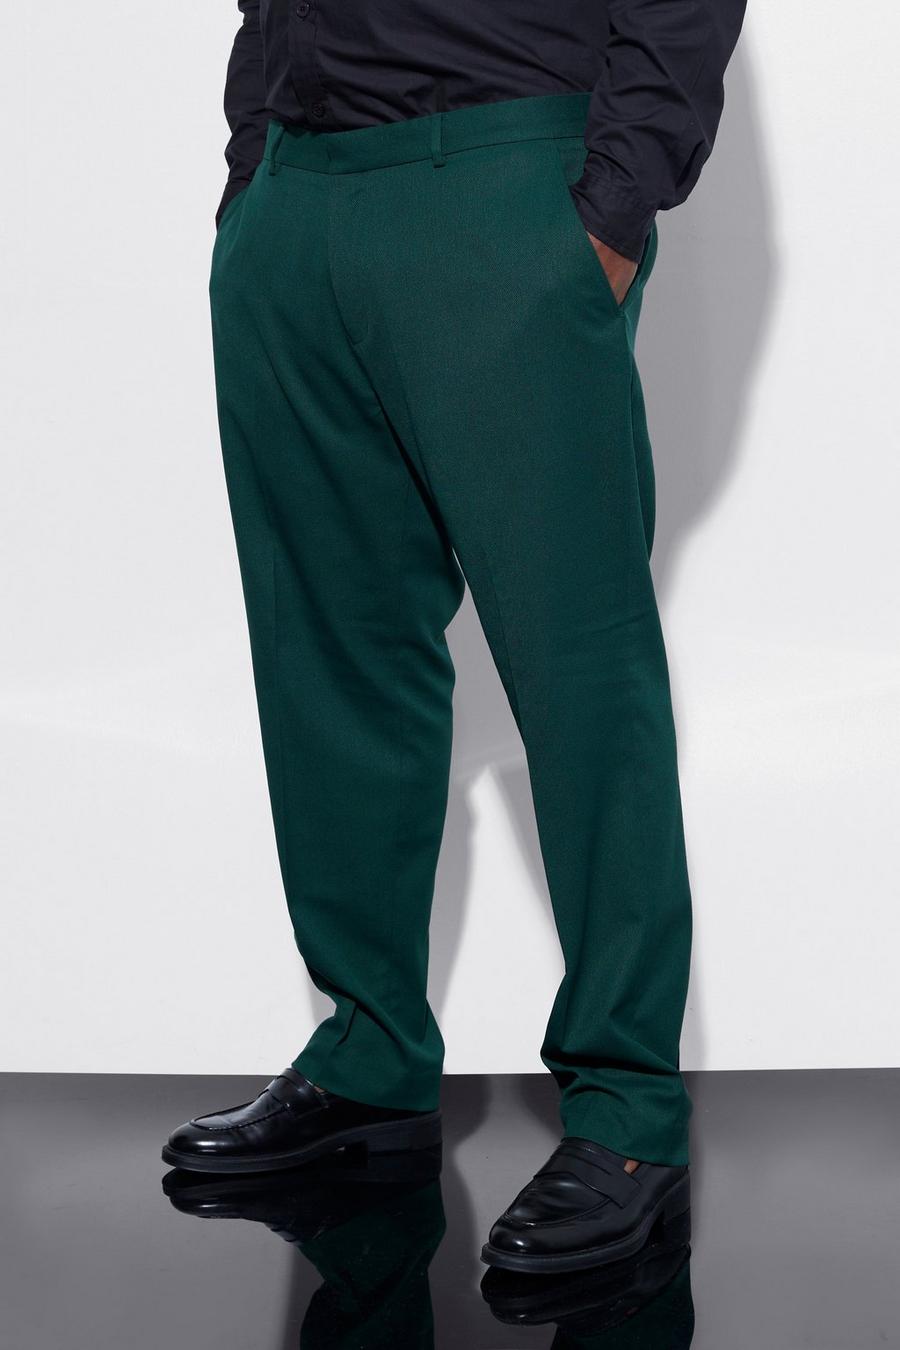 Pantaloni sartoriali Plus Size Slim Fit, Dark green verde